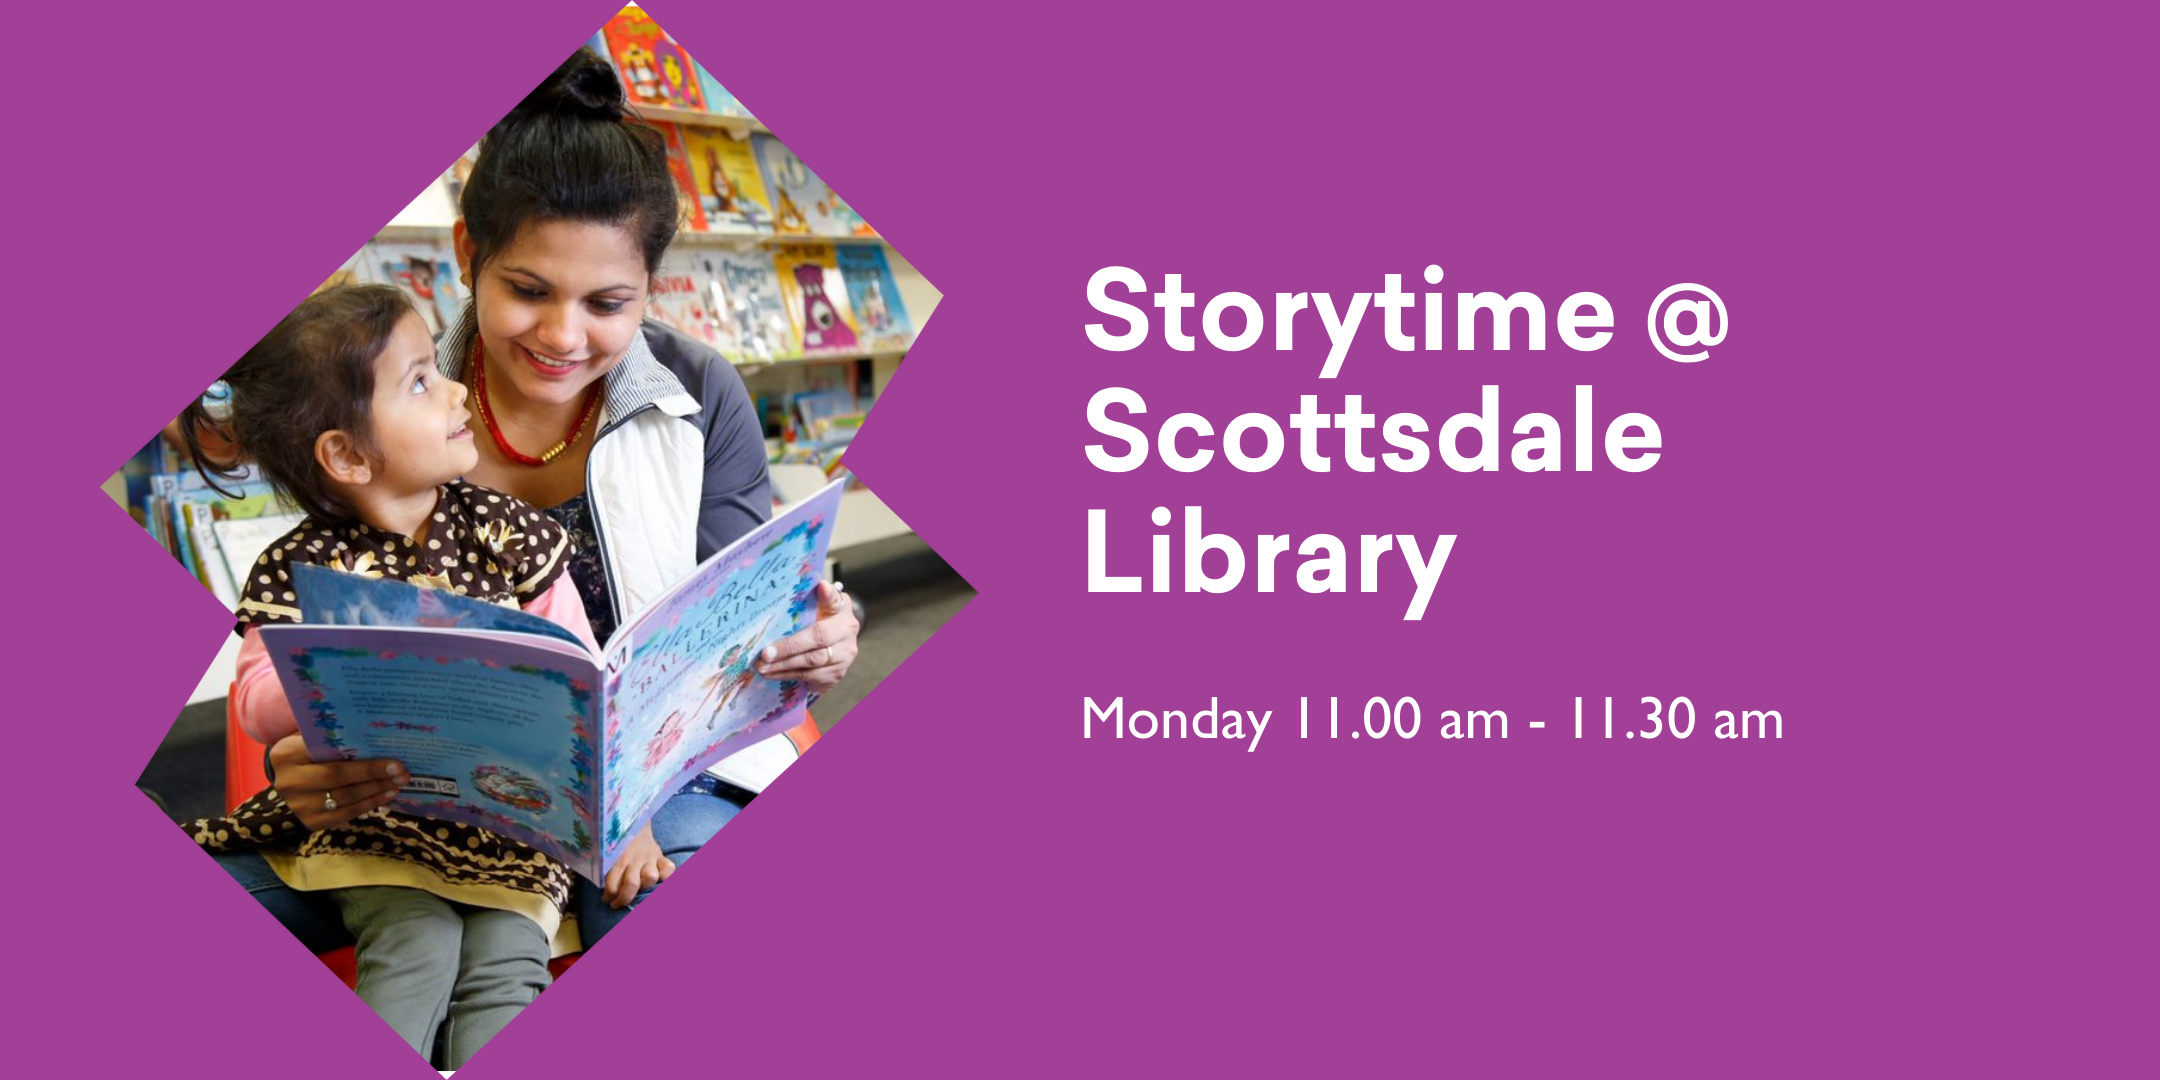 Storytime at Scottsdale library - Libraries Tasmania